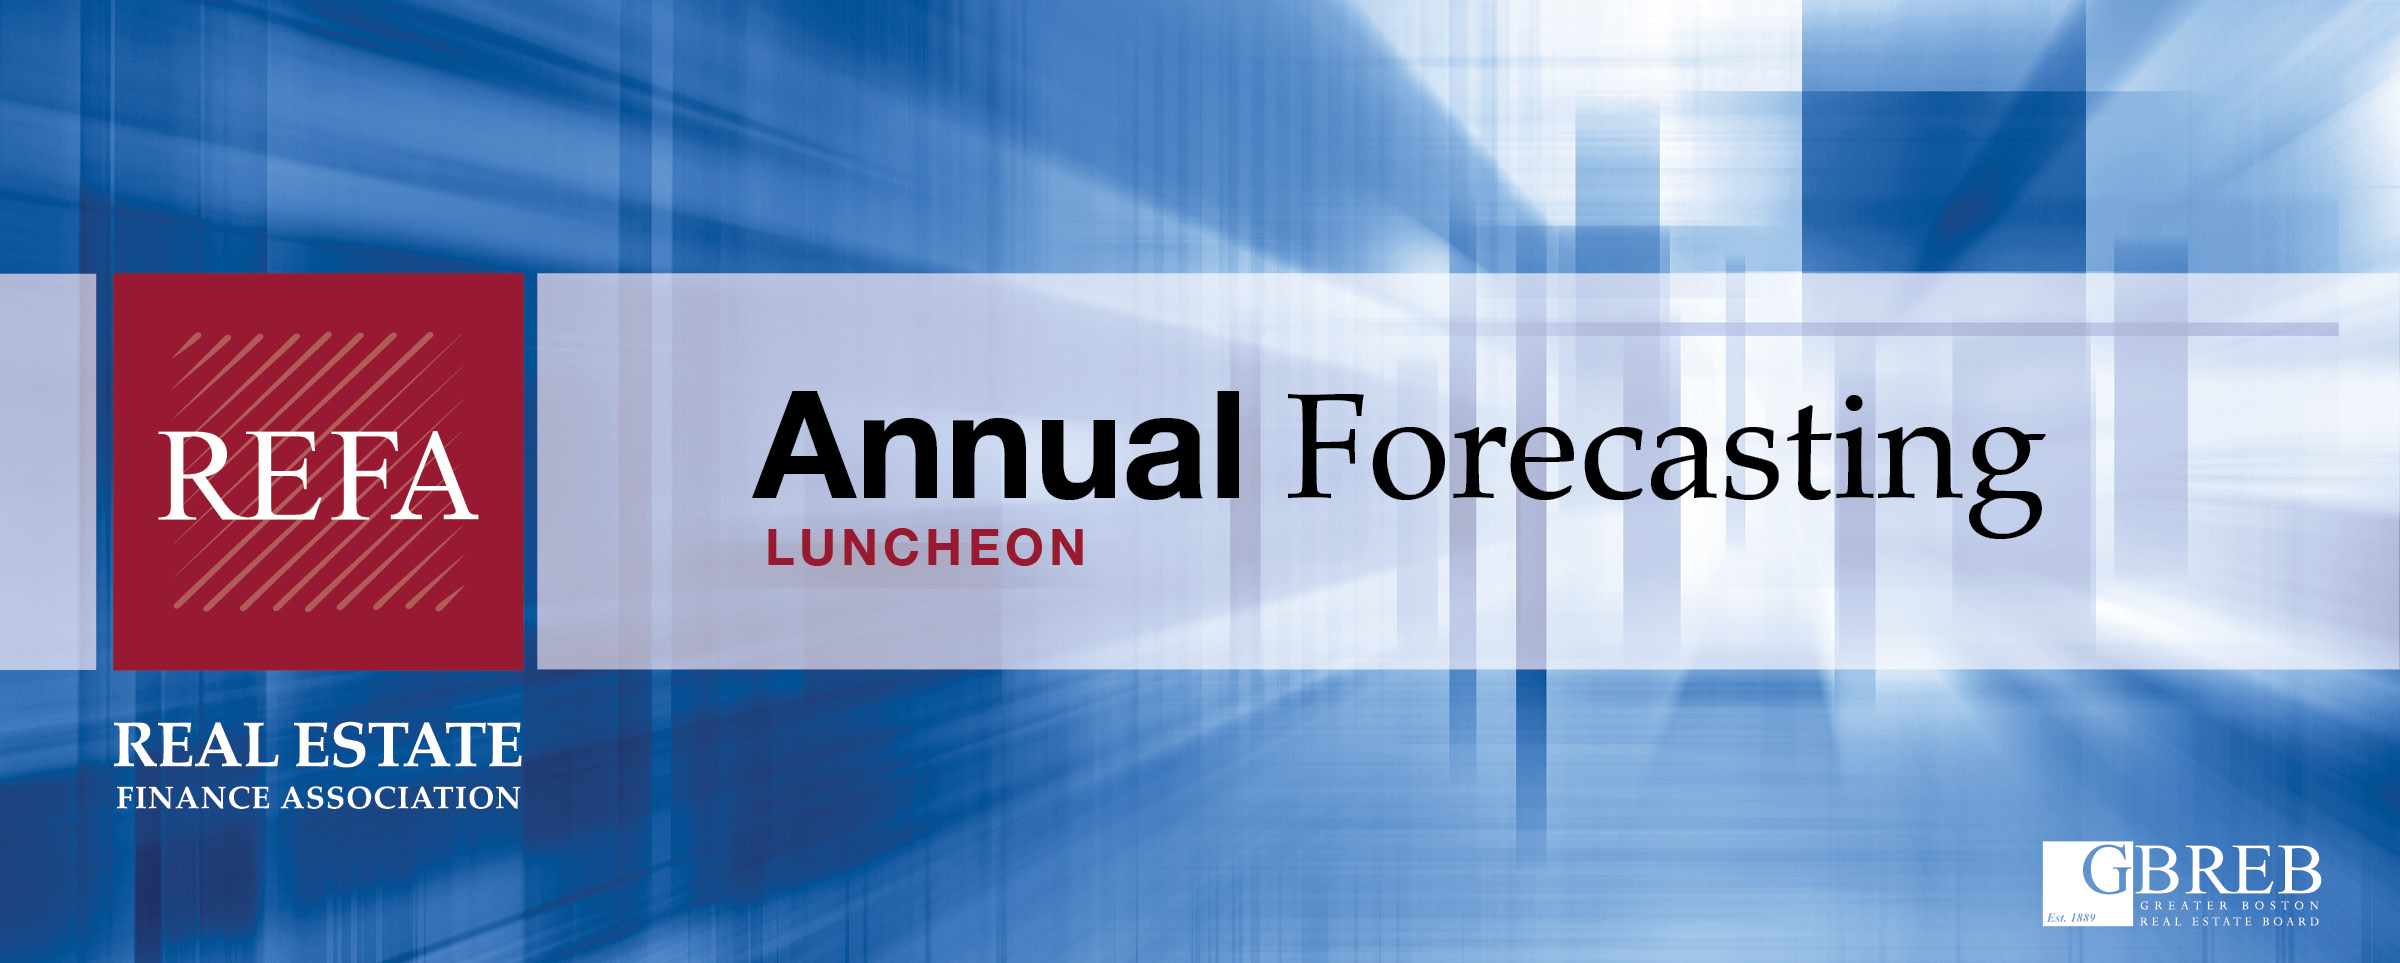 REFA Annual Forecasting Luncheon